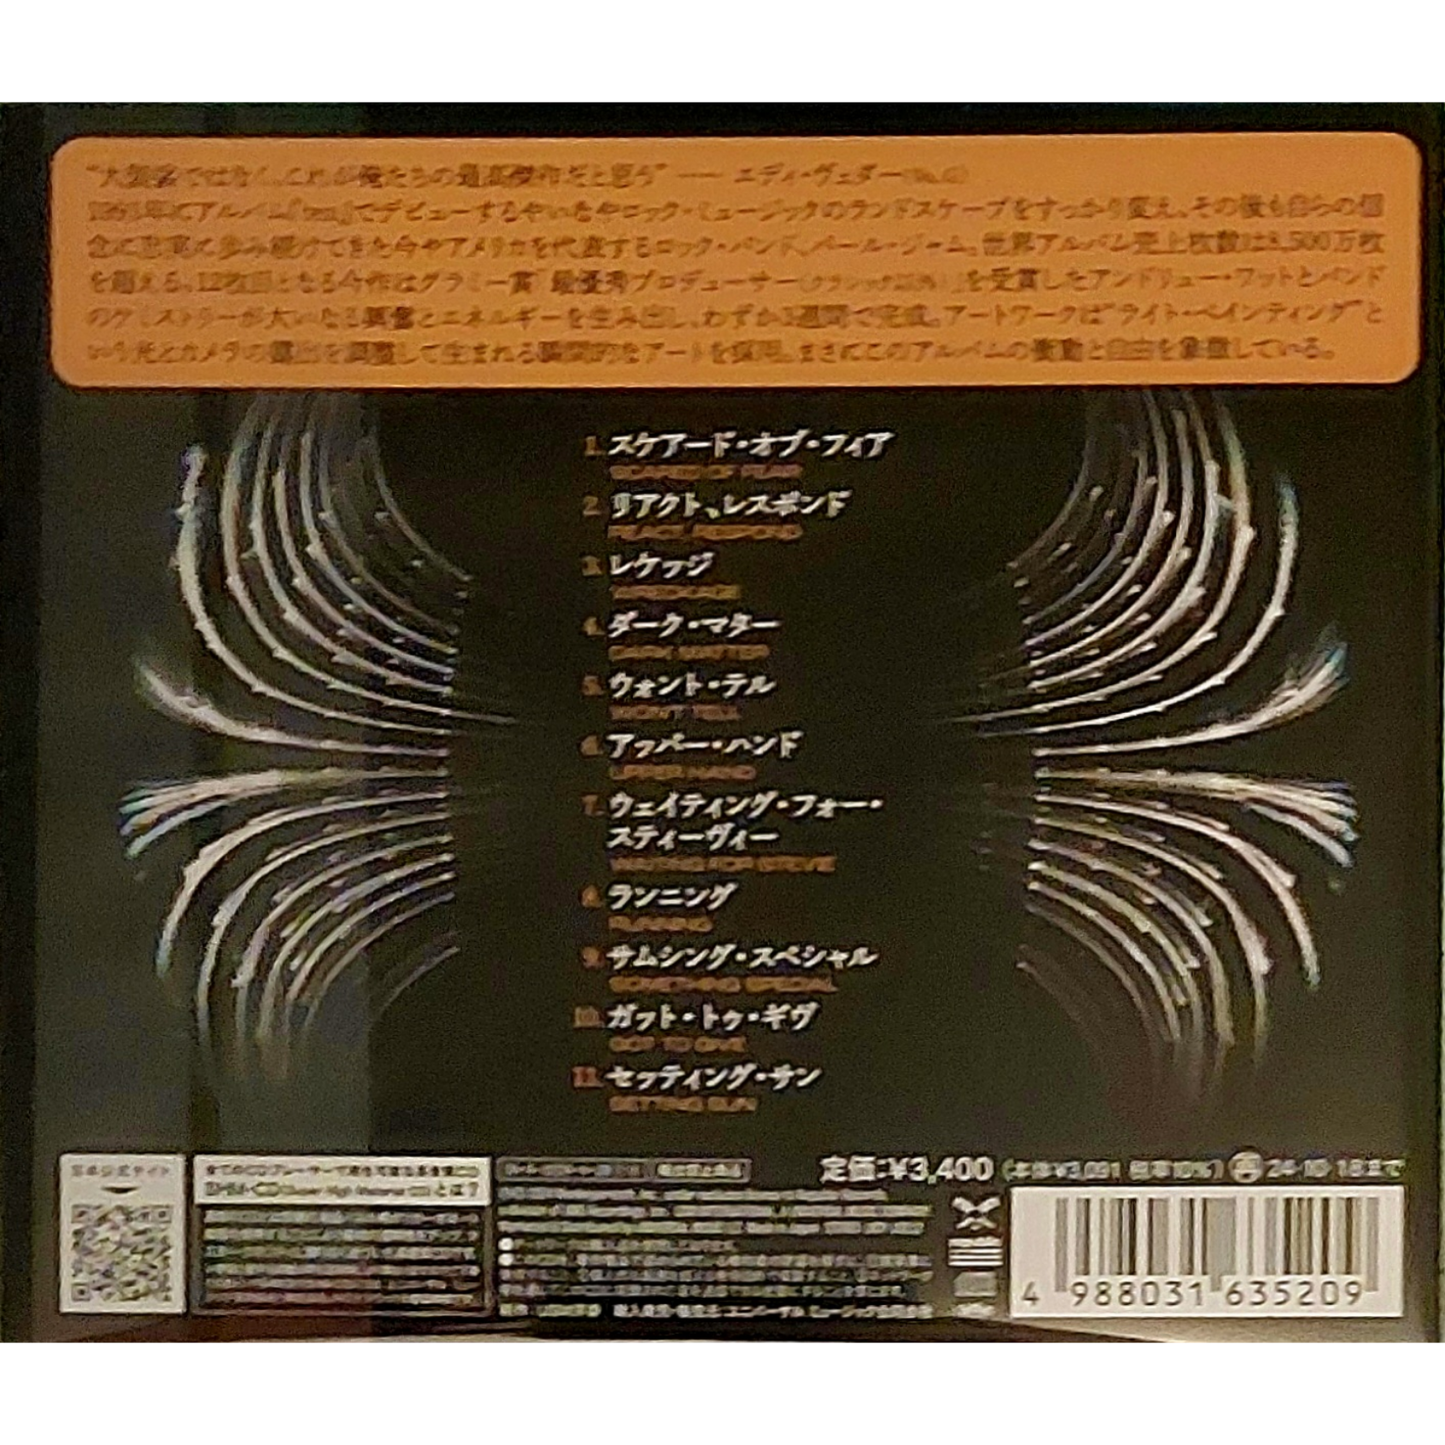 Pearl Jam: Dark Matter - Japanese Digibook SHM-CD